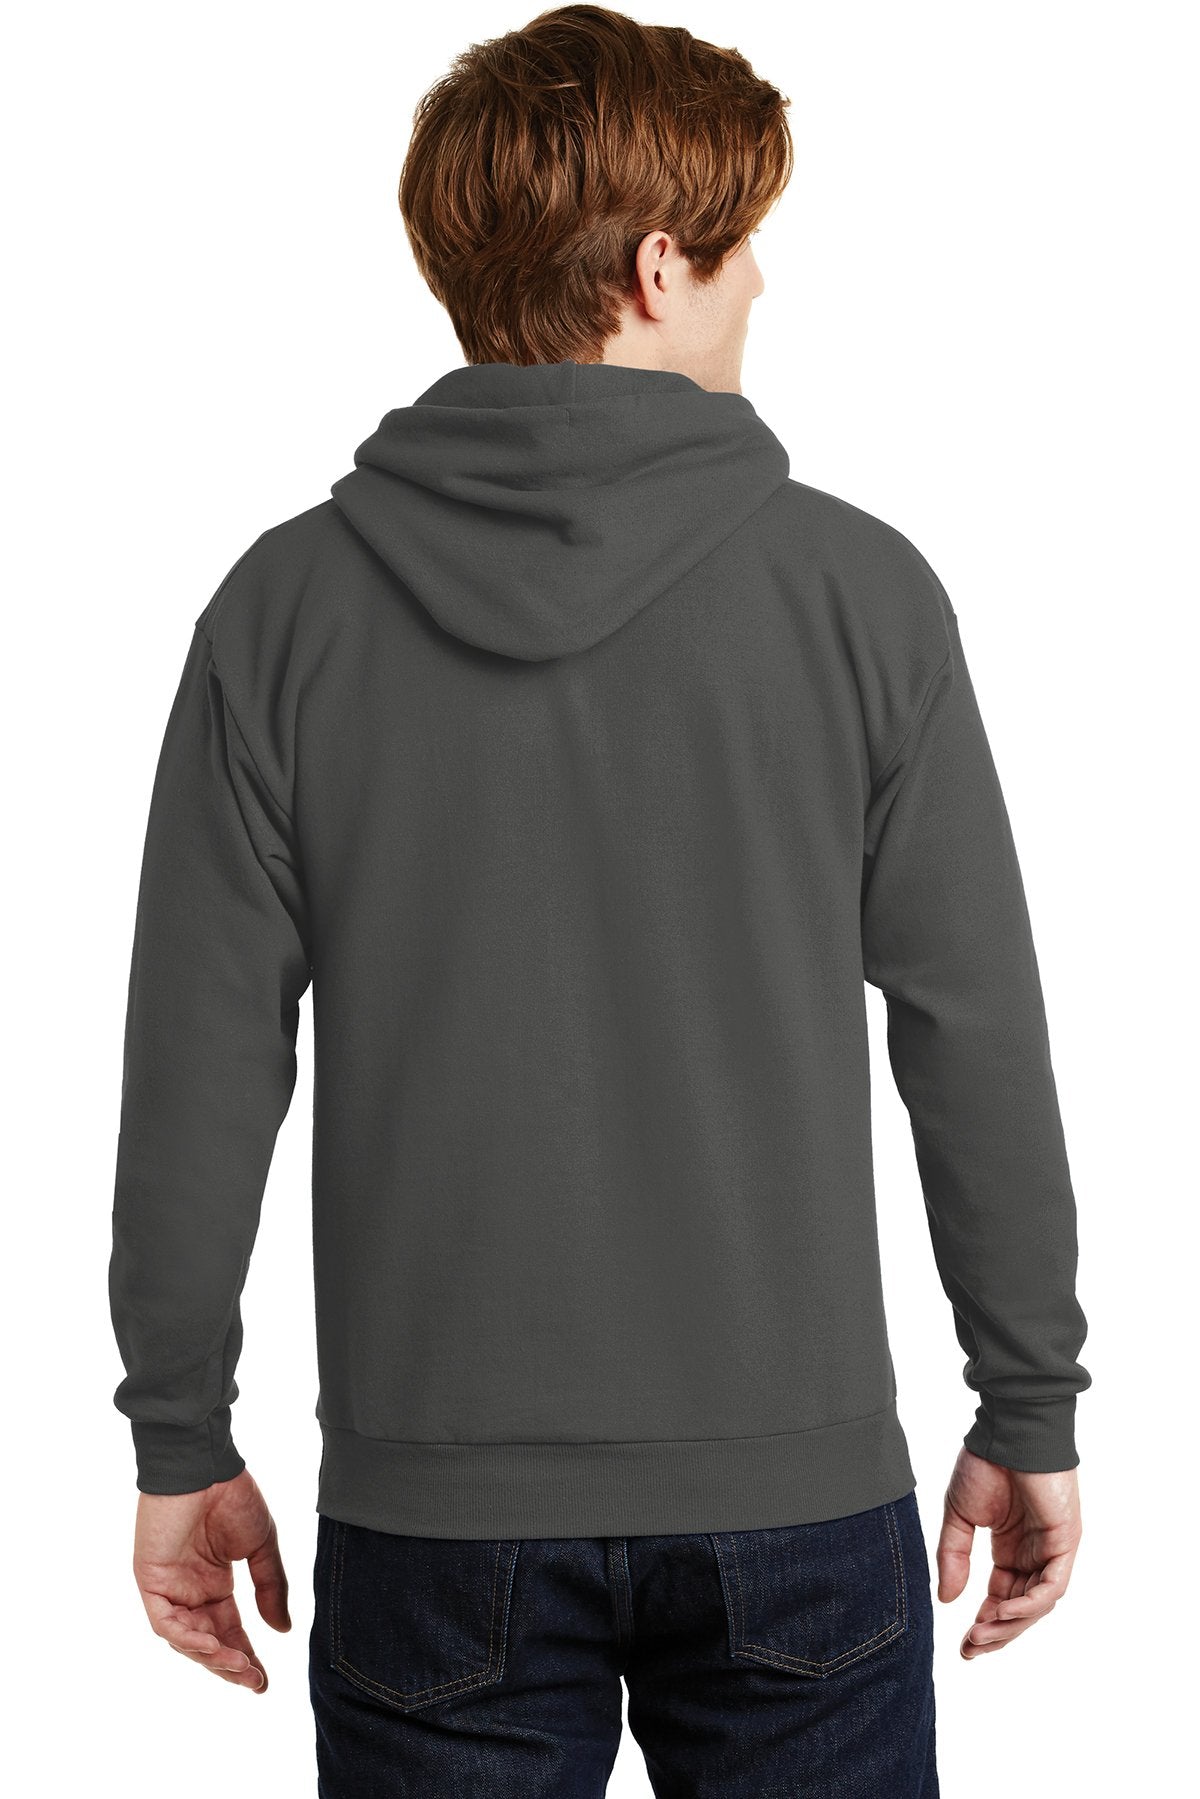 Hanes Ecosmart Pullover Hooded Sweatshirt P170 Smoke Grey